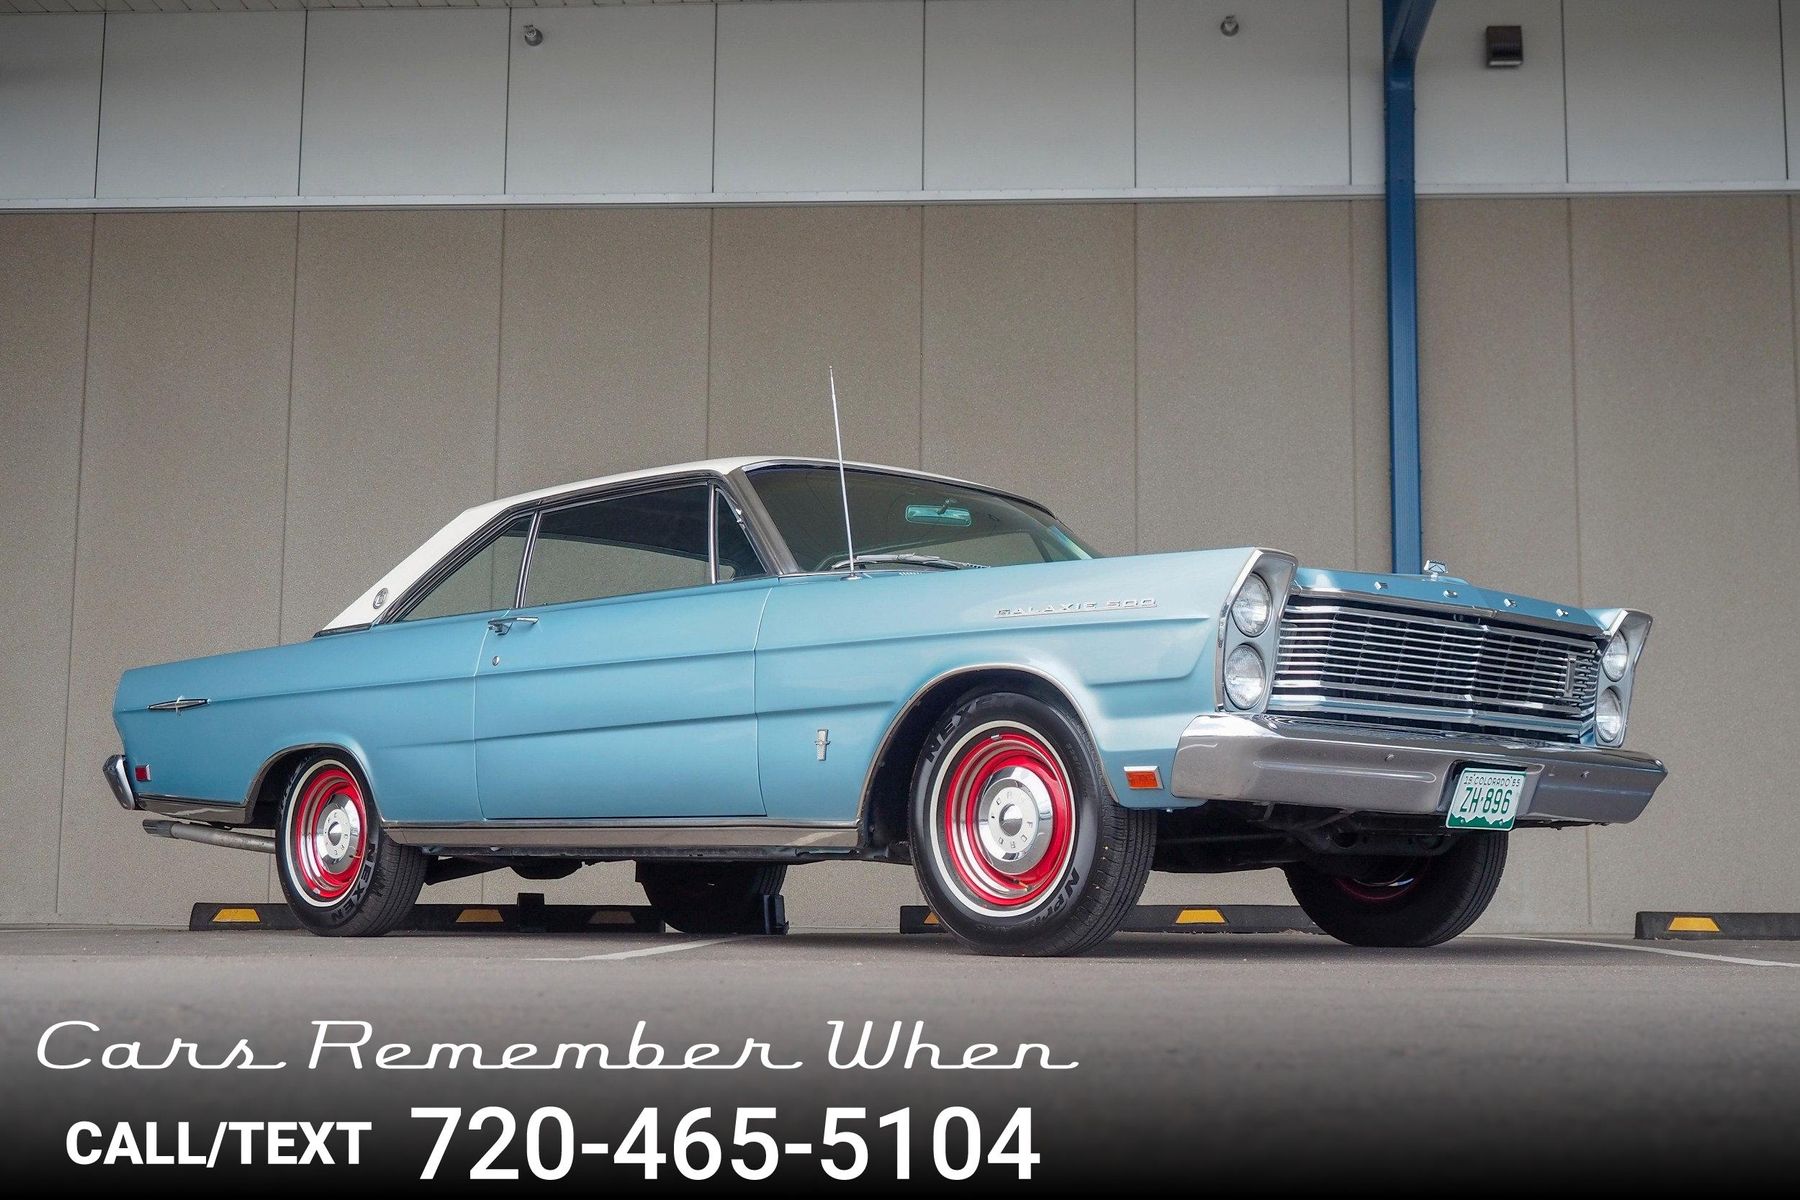 1965 Ford Galaxie LTD | Cars Remember When